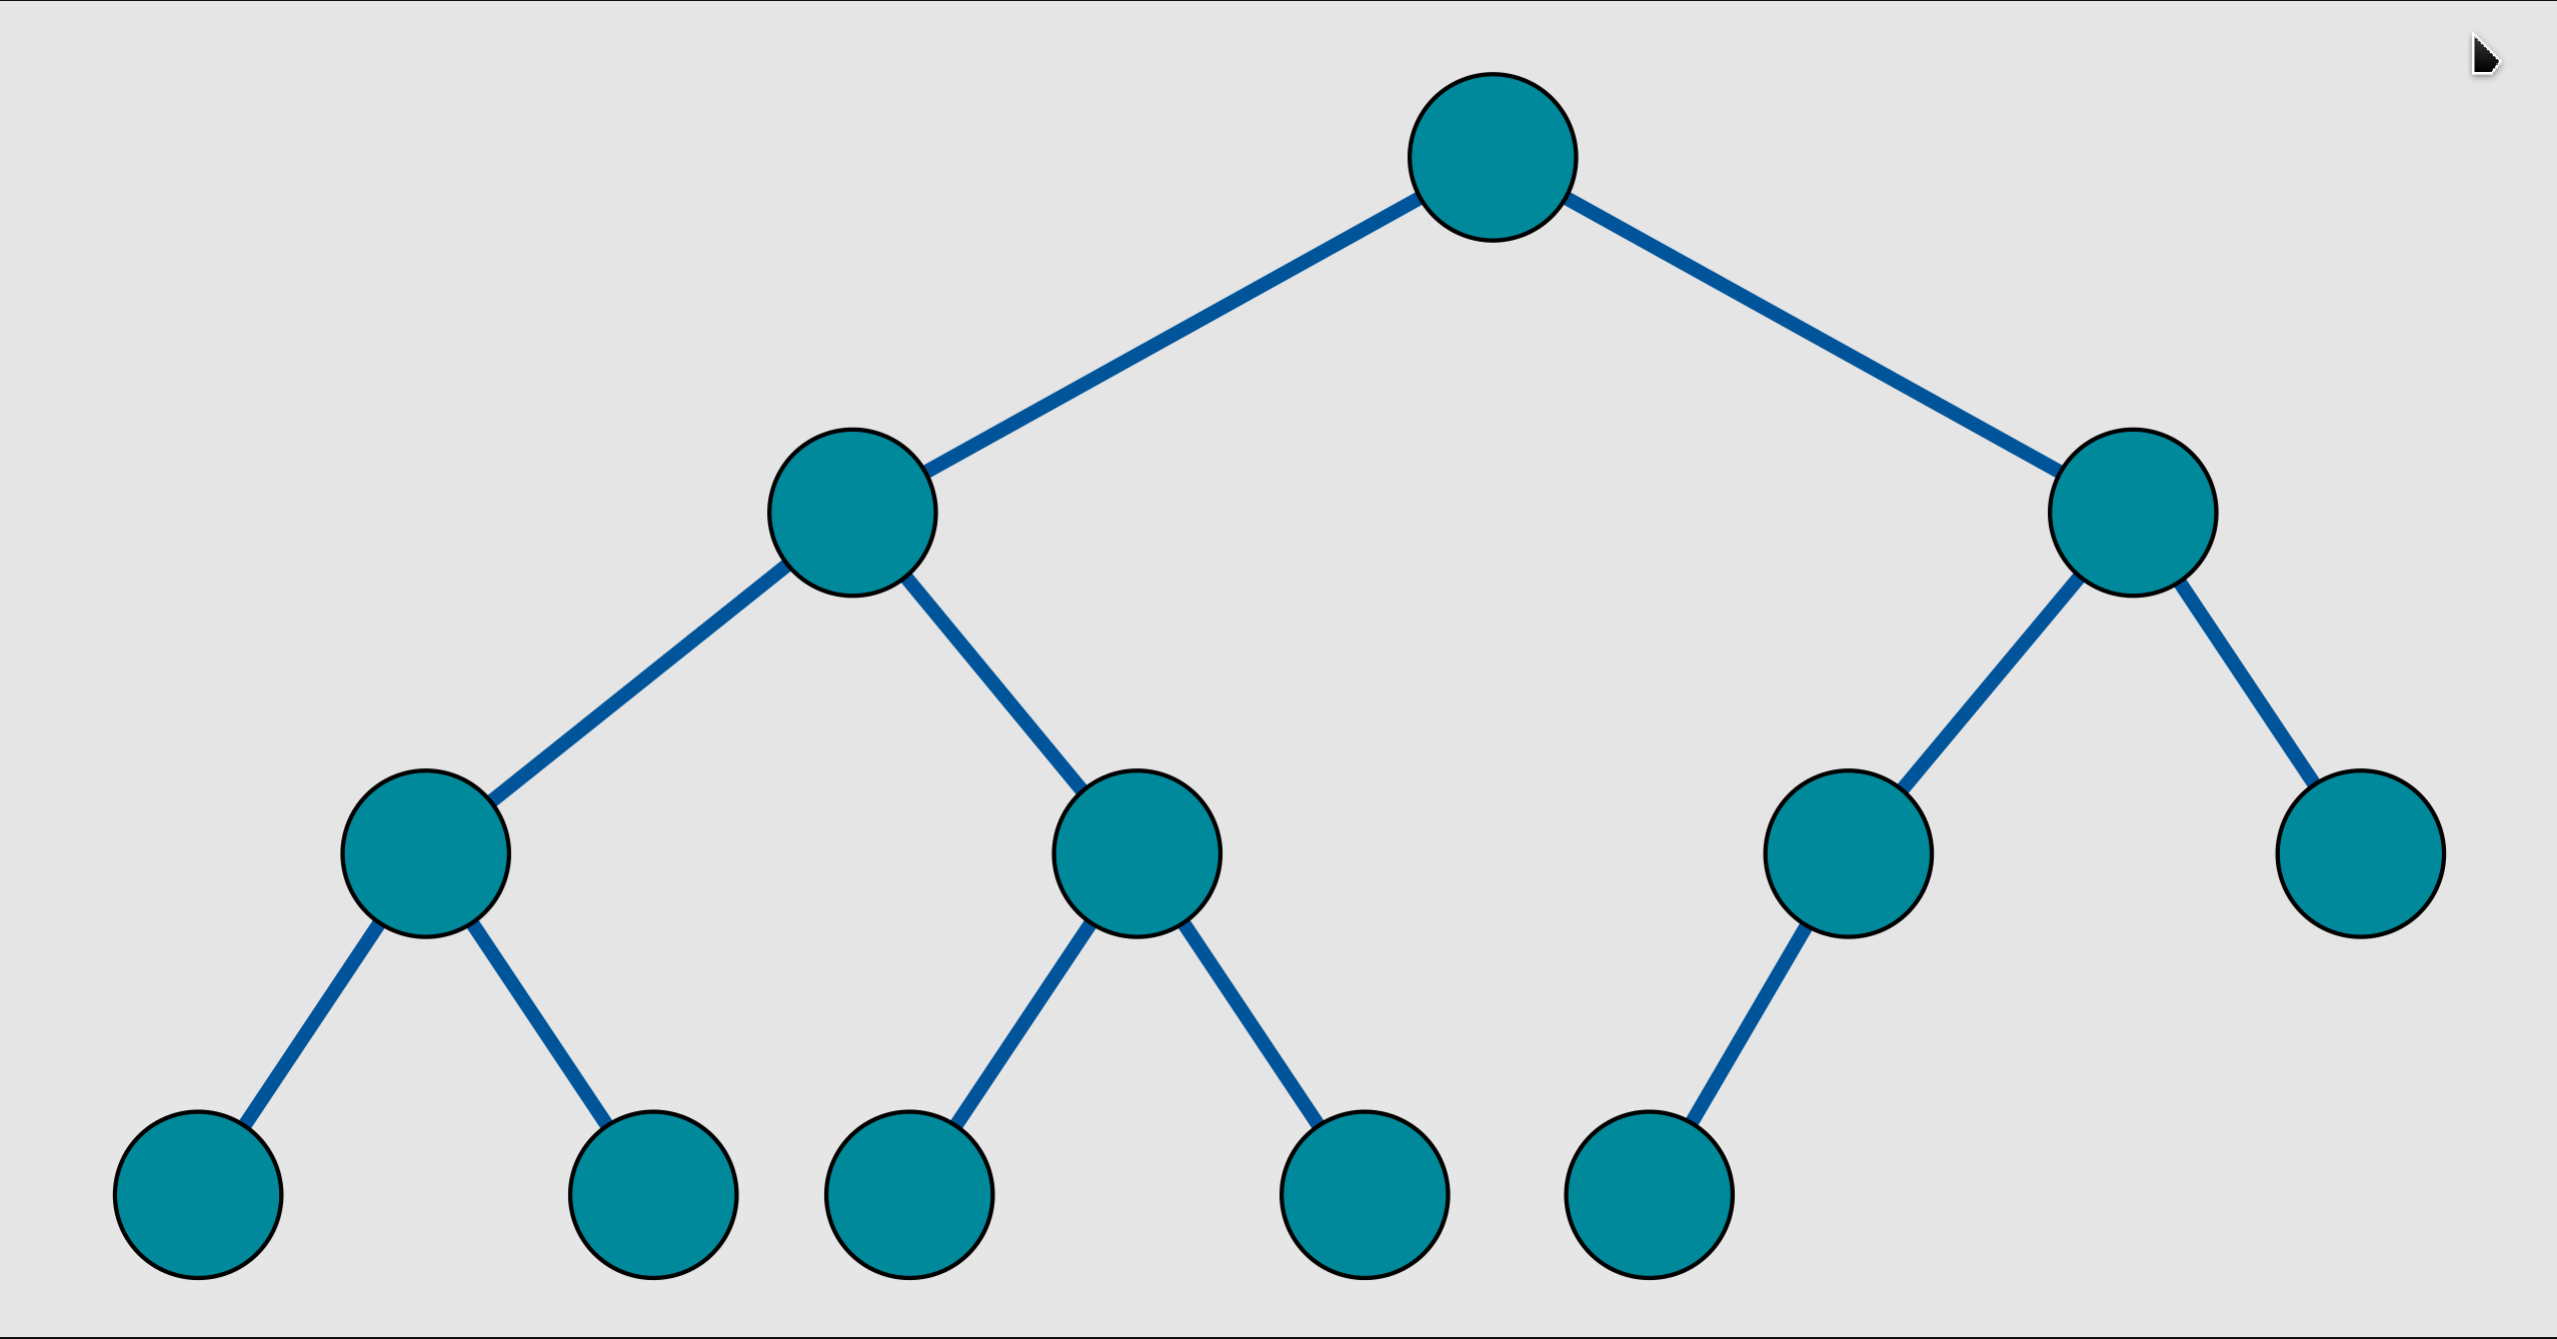 complete binary tree, not full binary tree